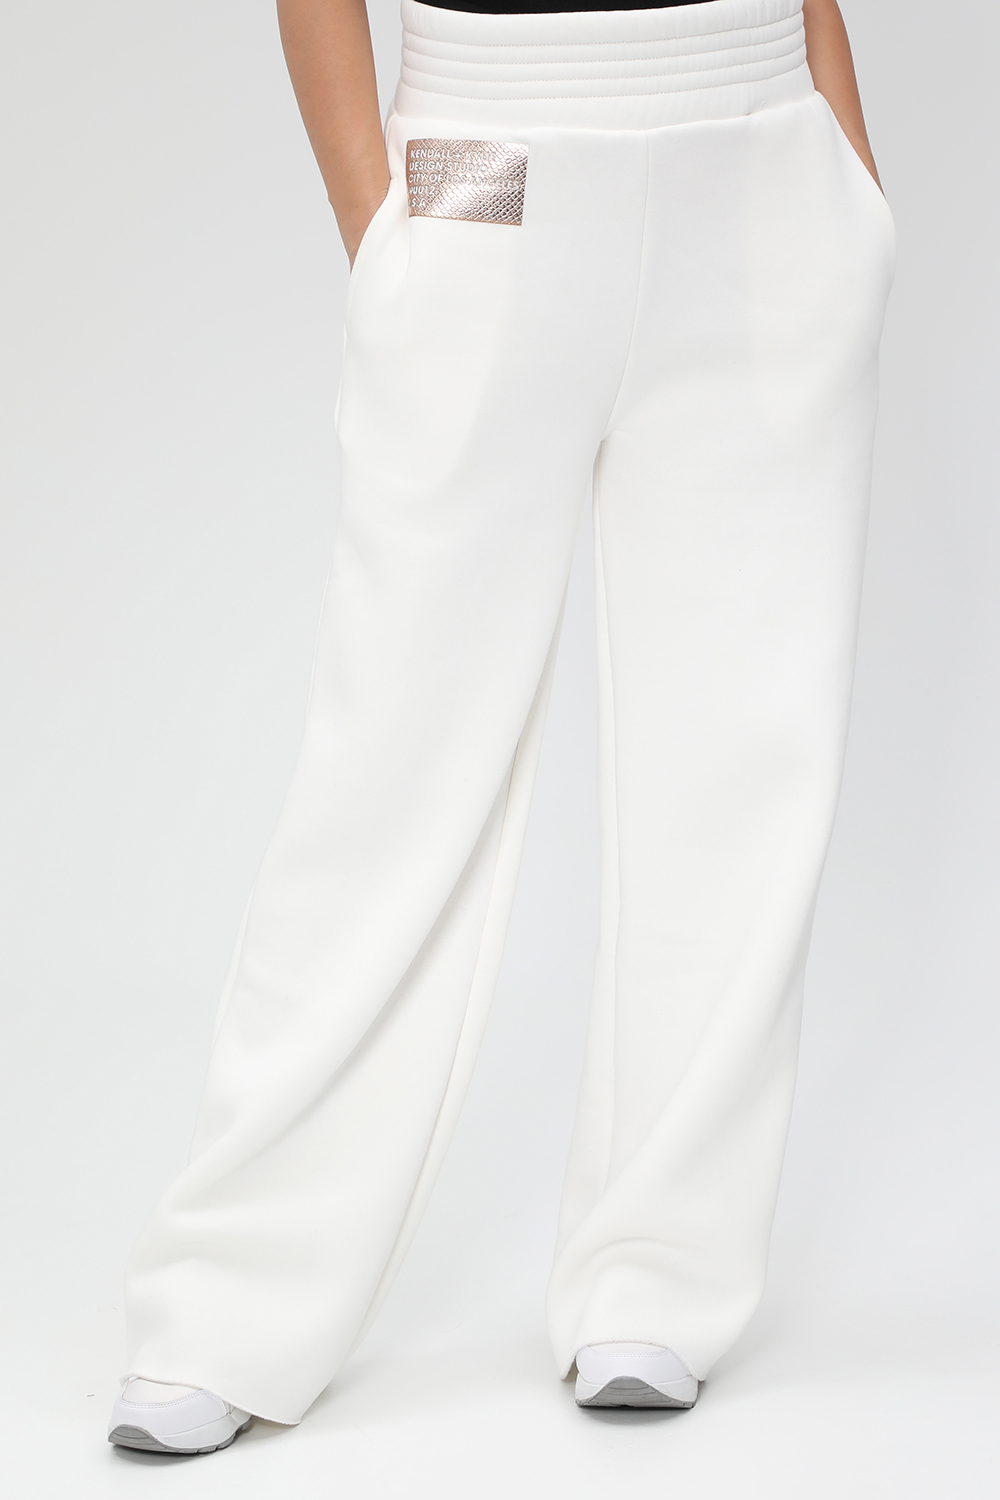 KENDALL + KYLIE – Γυναικειο παντελονι φορμας KENDALL + KYLIE ACTIVE BOTTOM λευκο